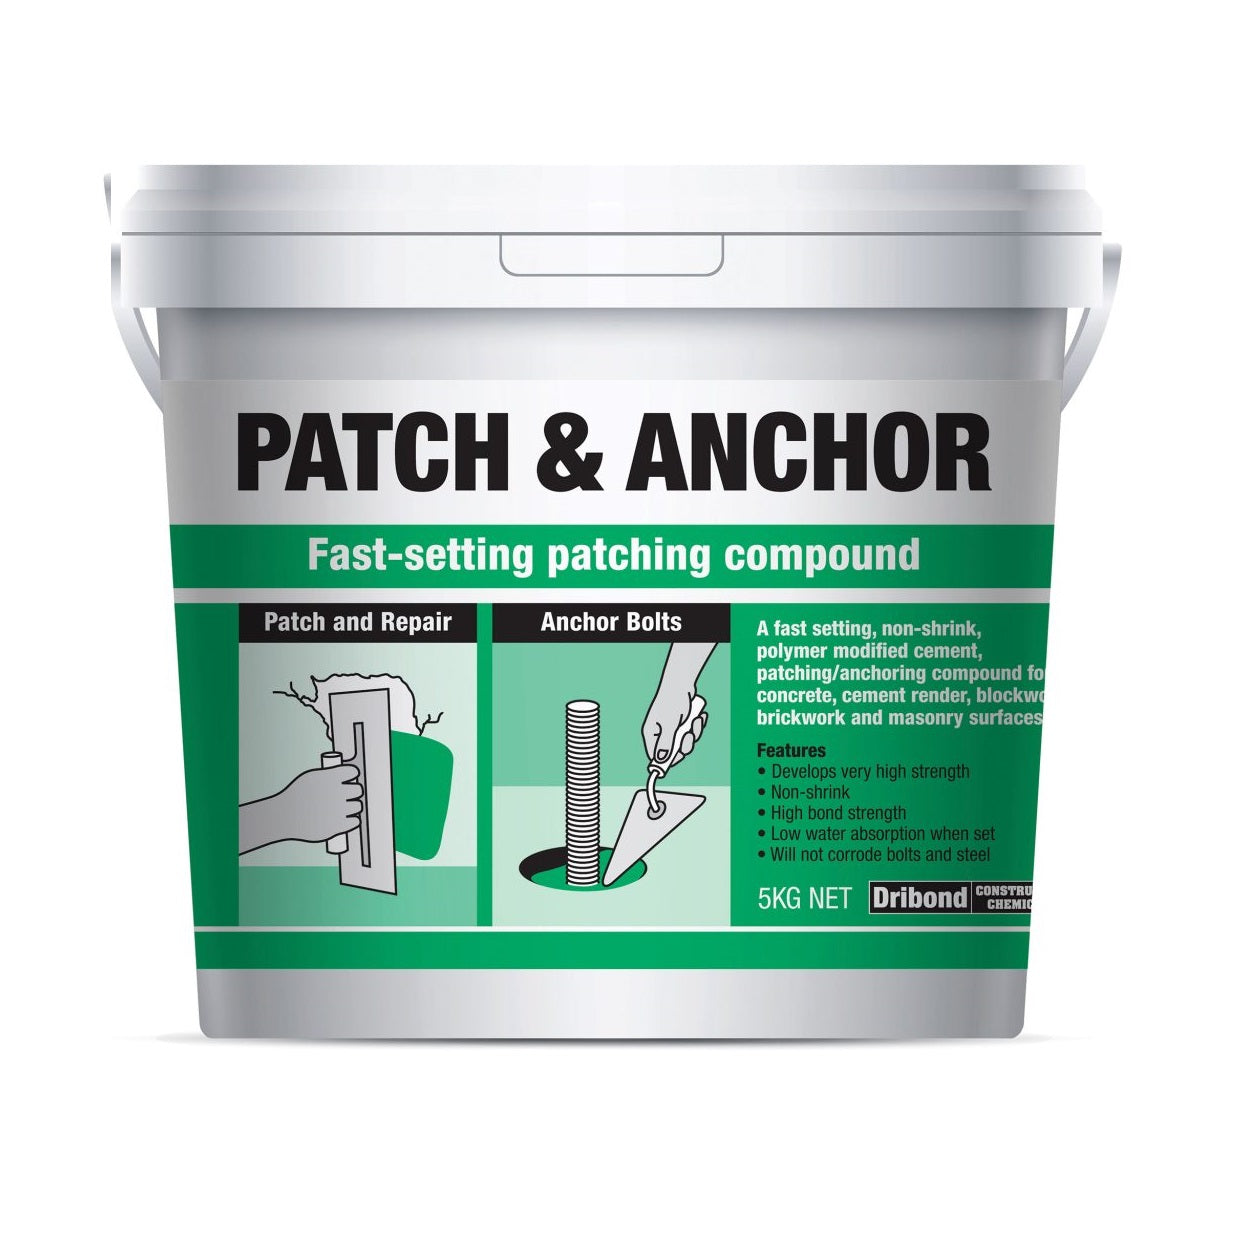 PATCH & ANCHOR 20kg Bag - a Dribond Product